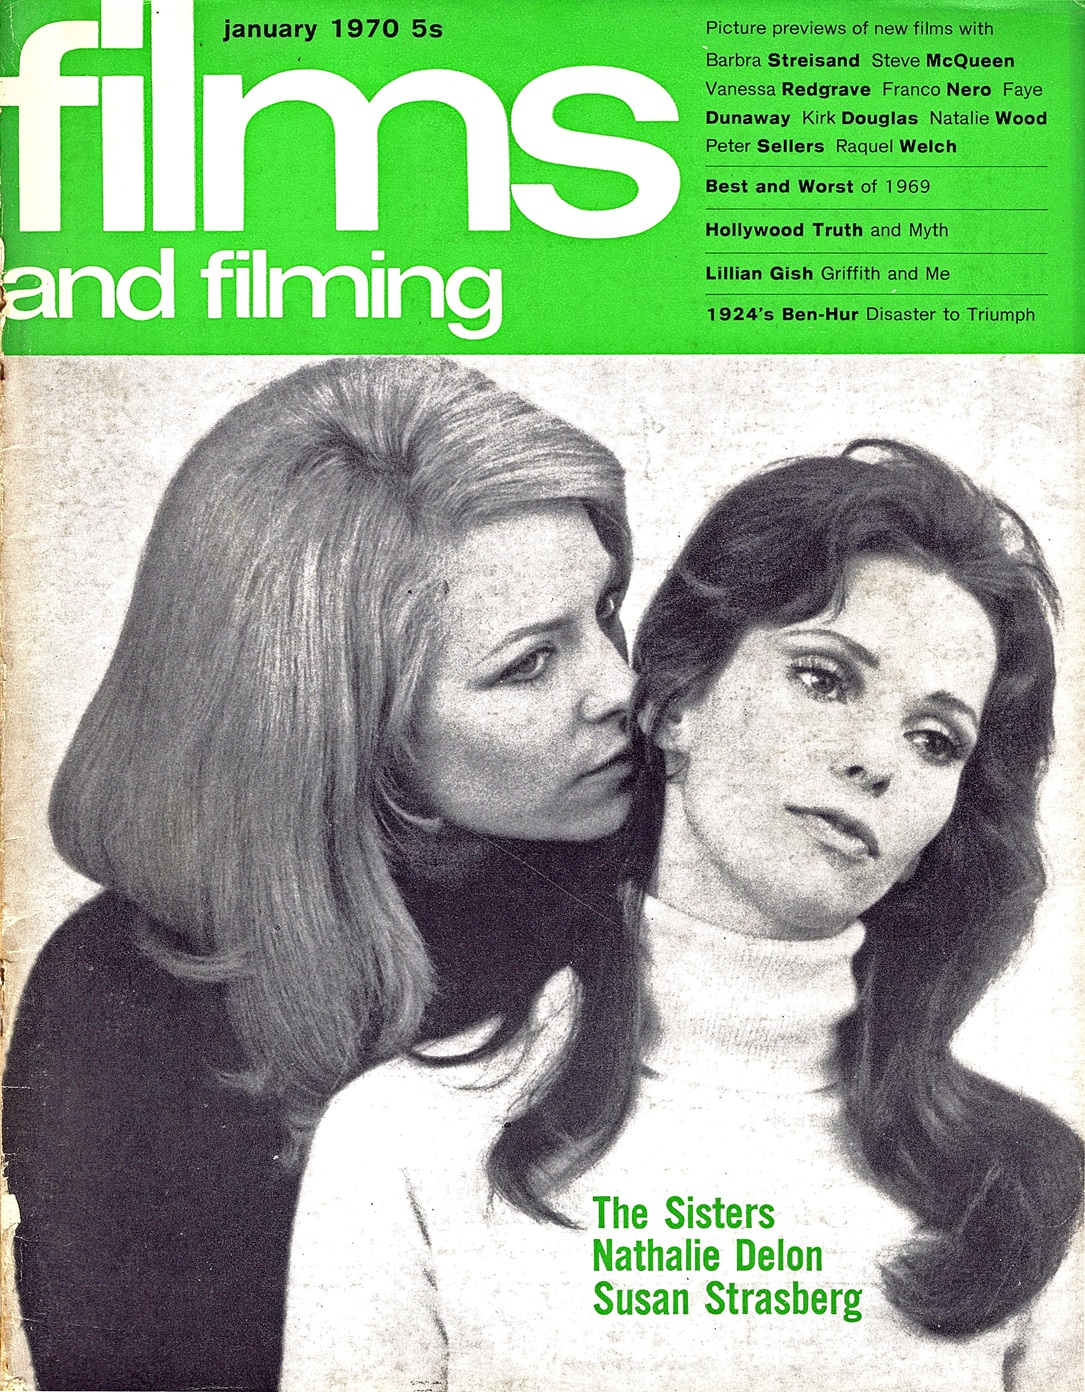 The Sisters (1969) Screenshot 1 